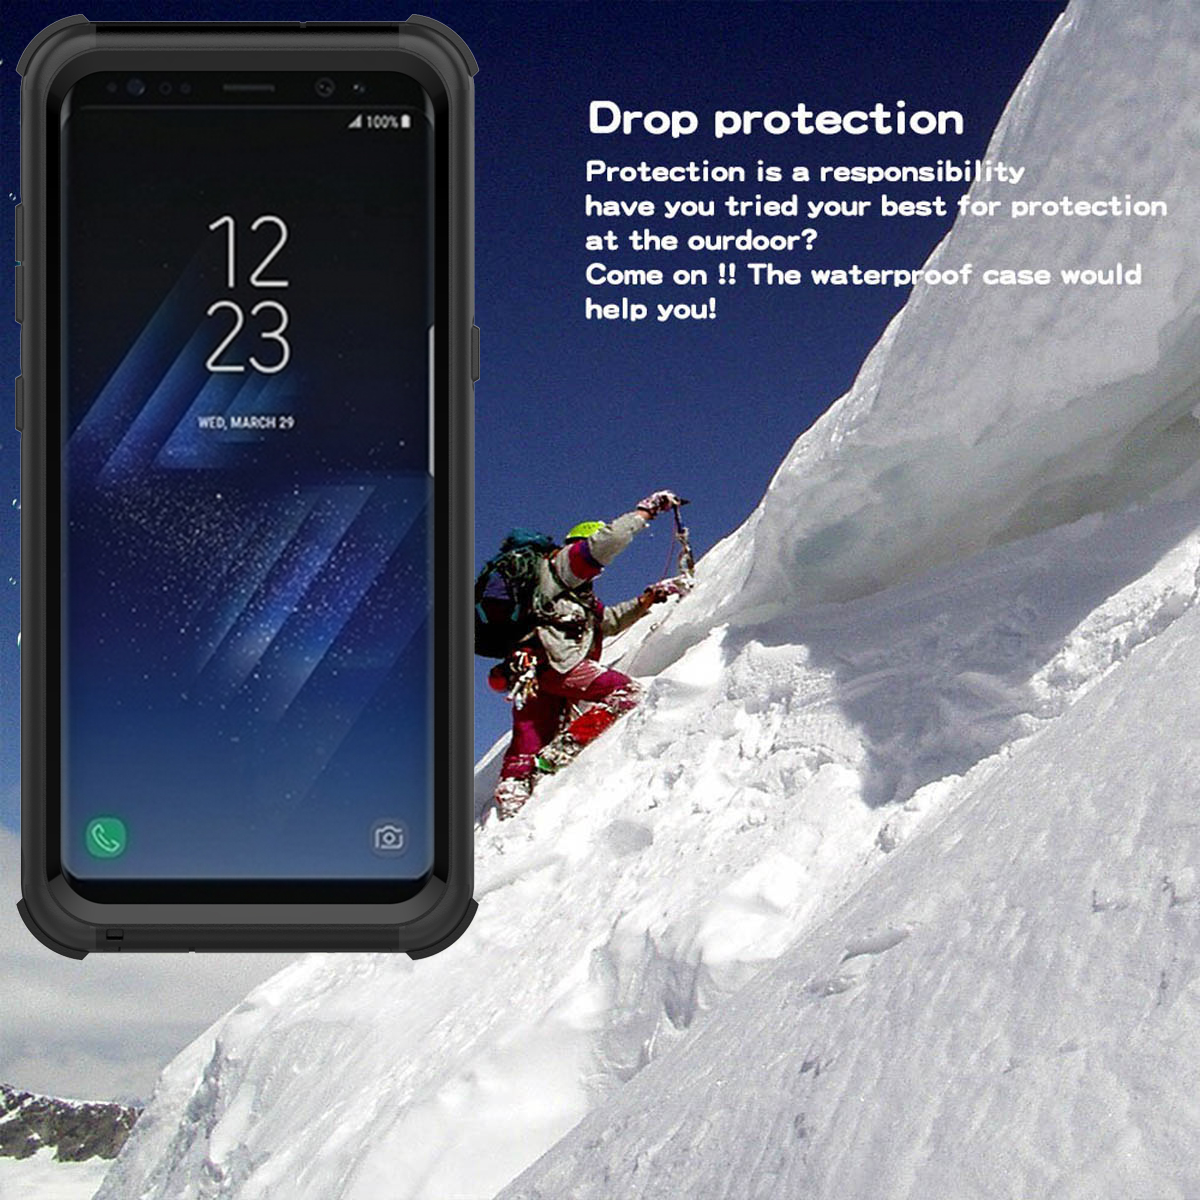 2-In-1-Waterproof-Snowproof-Dustproof-Shockproof-PC-PET-TPU-Case-for-Samsung-Galaxy-S8-58-1165451